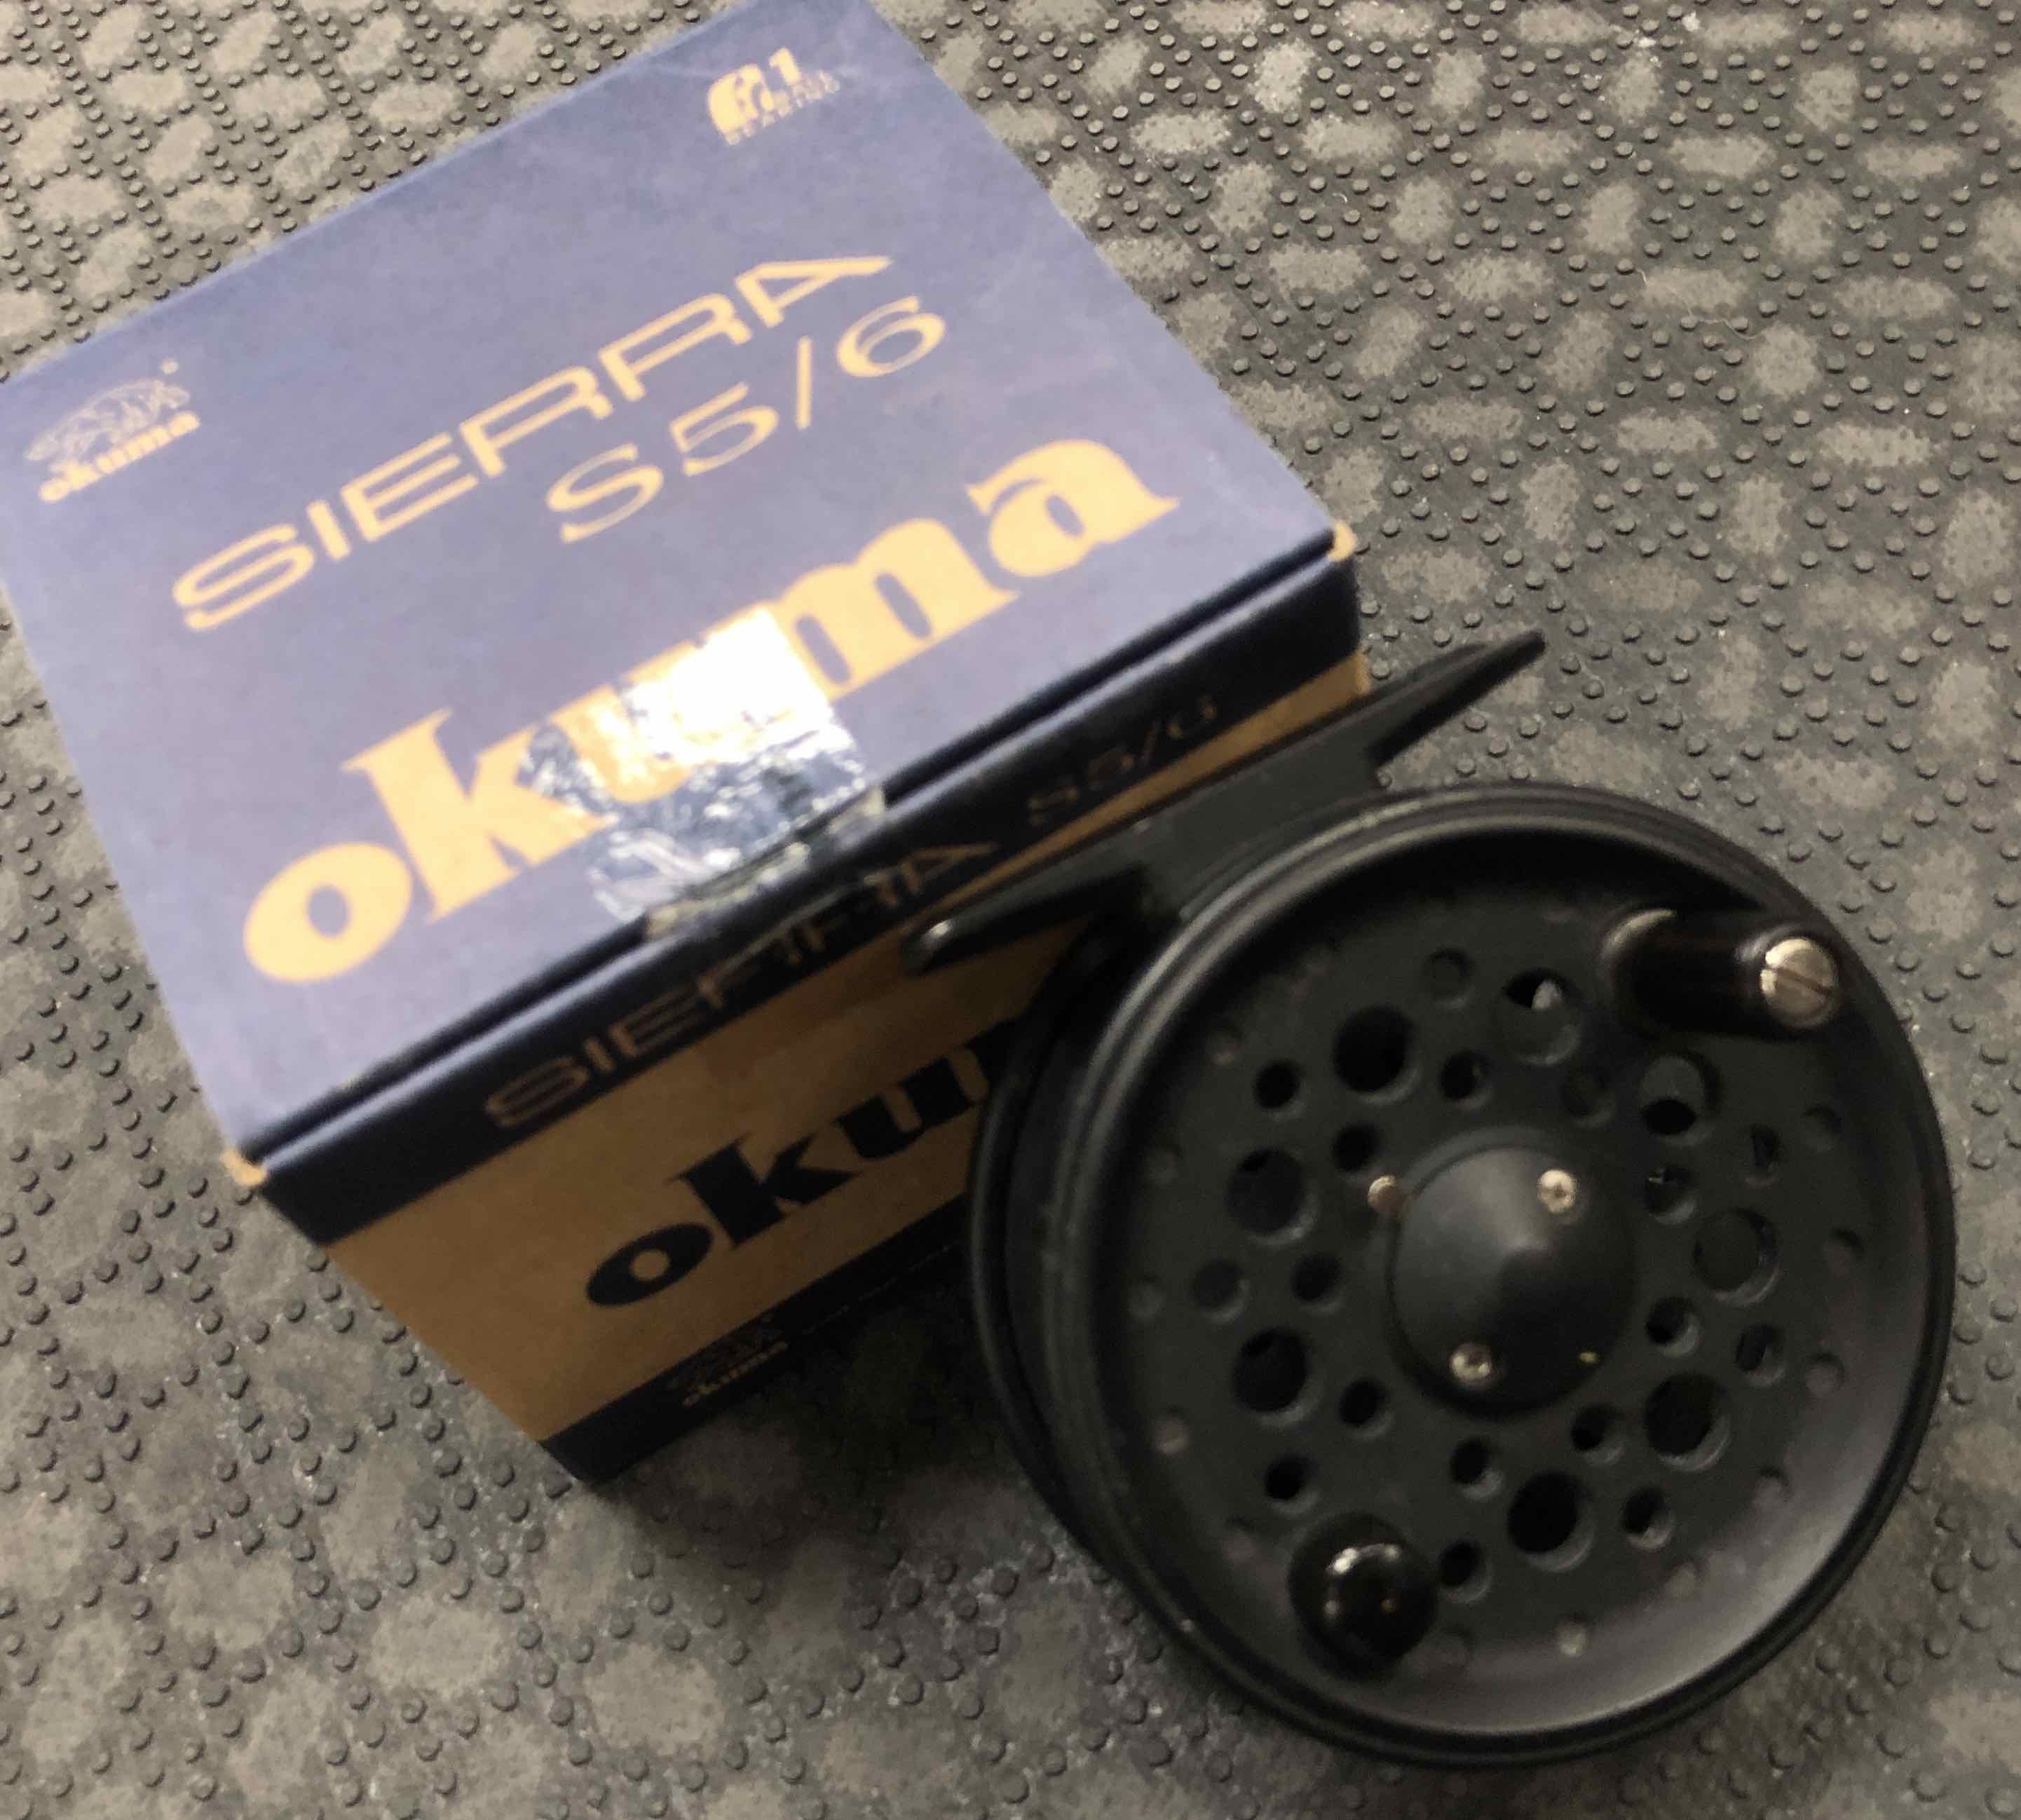 Okuma Sierra S5/6 Fly Reel - $25